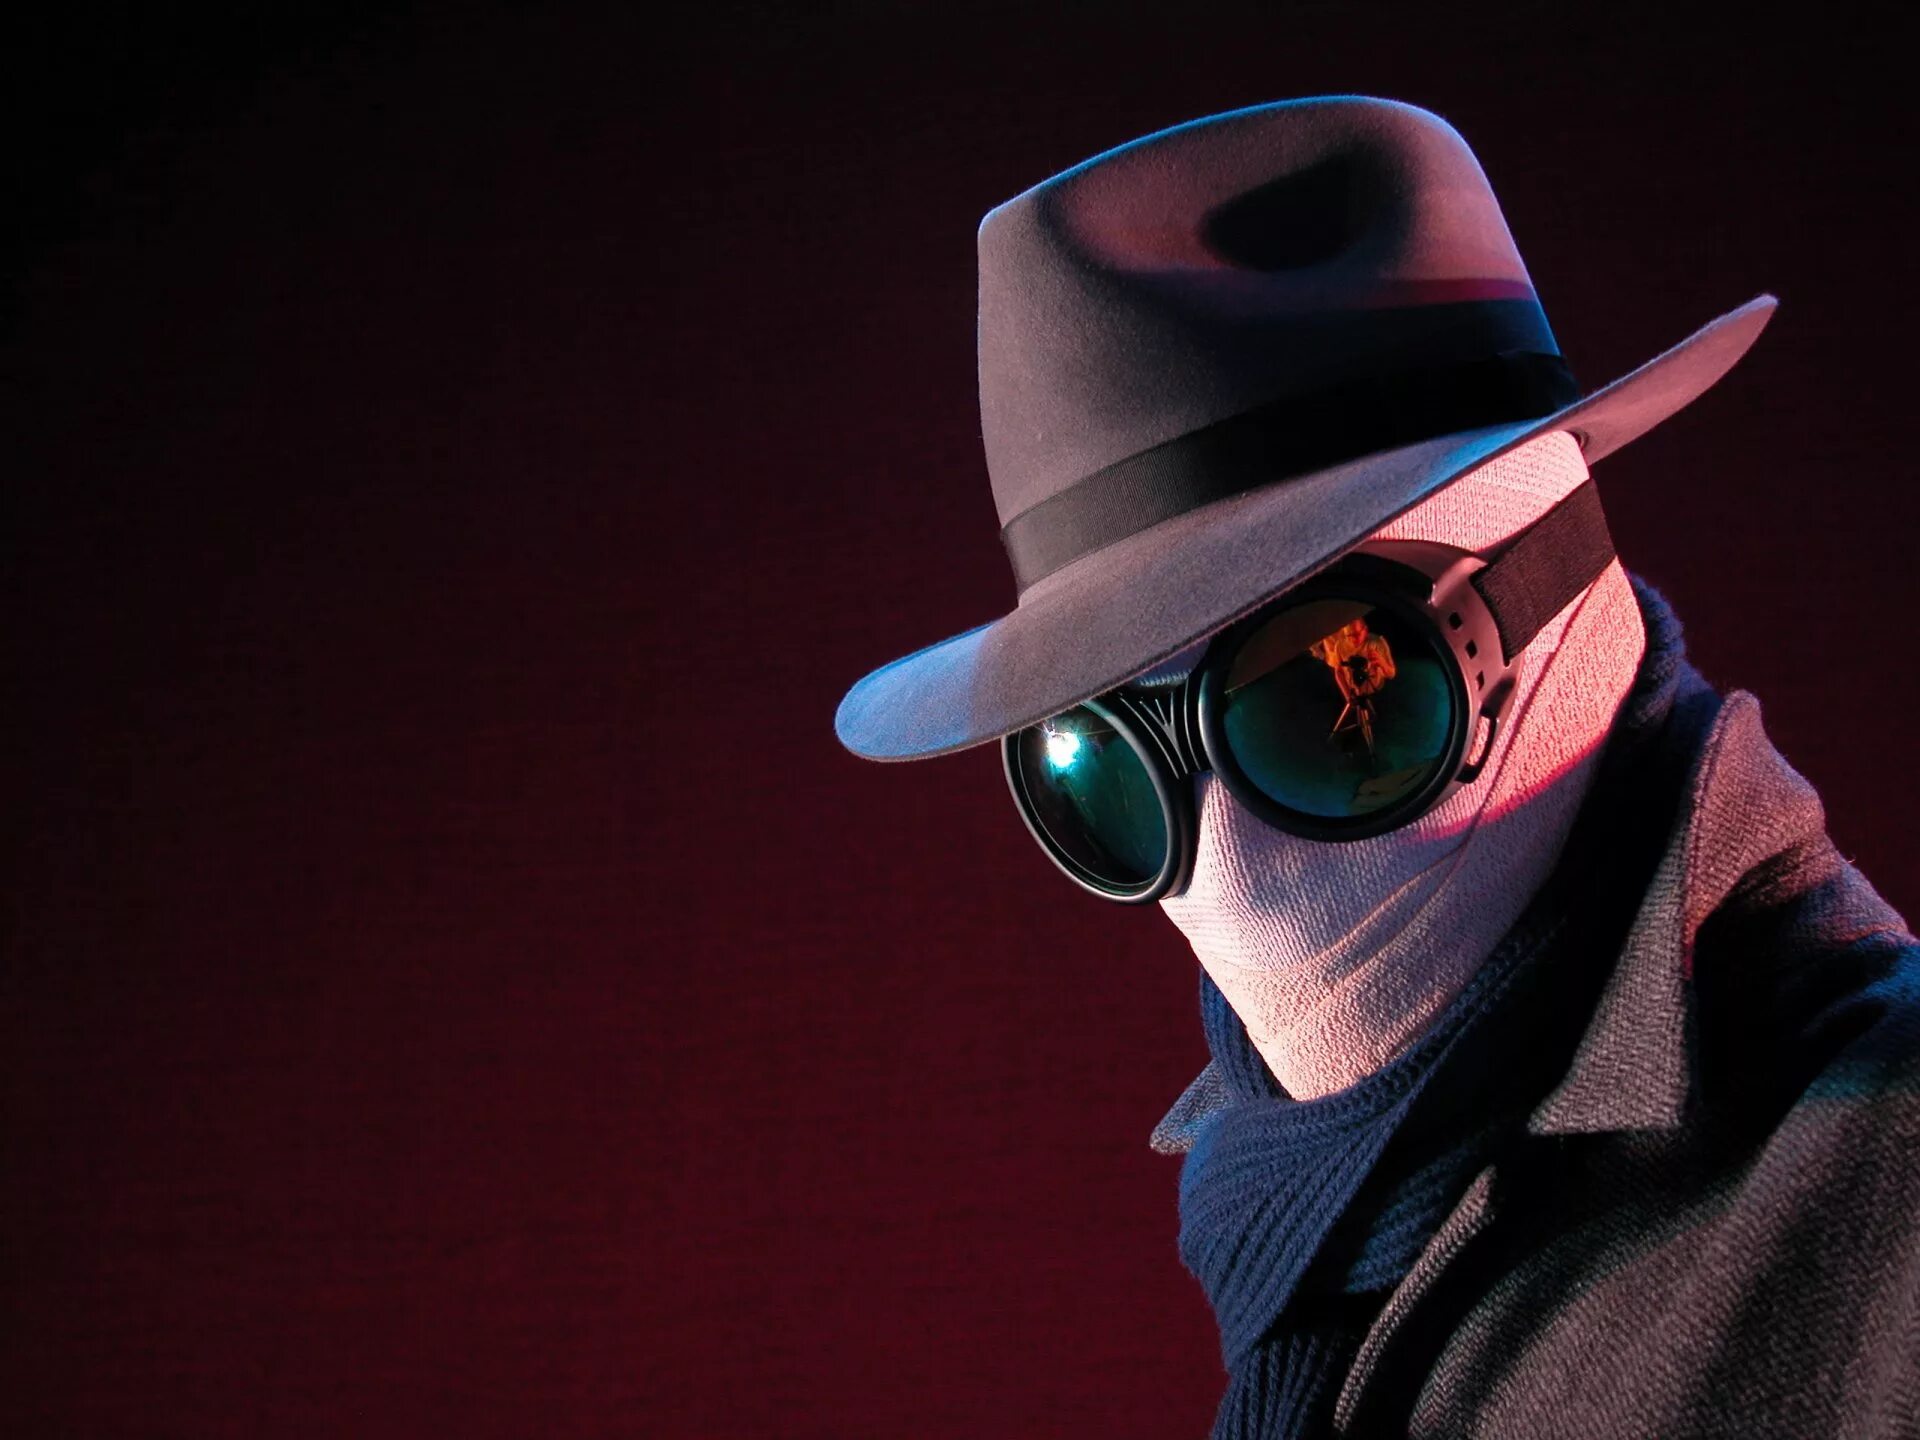 Фото на аватарку в контакте. Человек невидимка Марвел. Человек в шляпе. Человек в маске и шляпе.